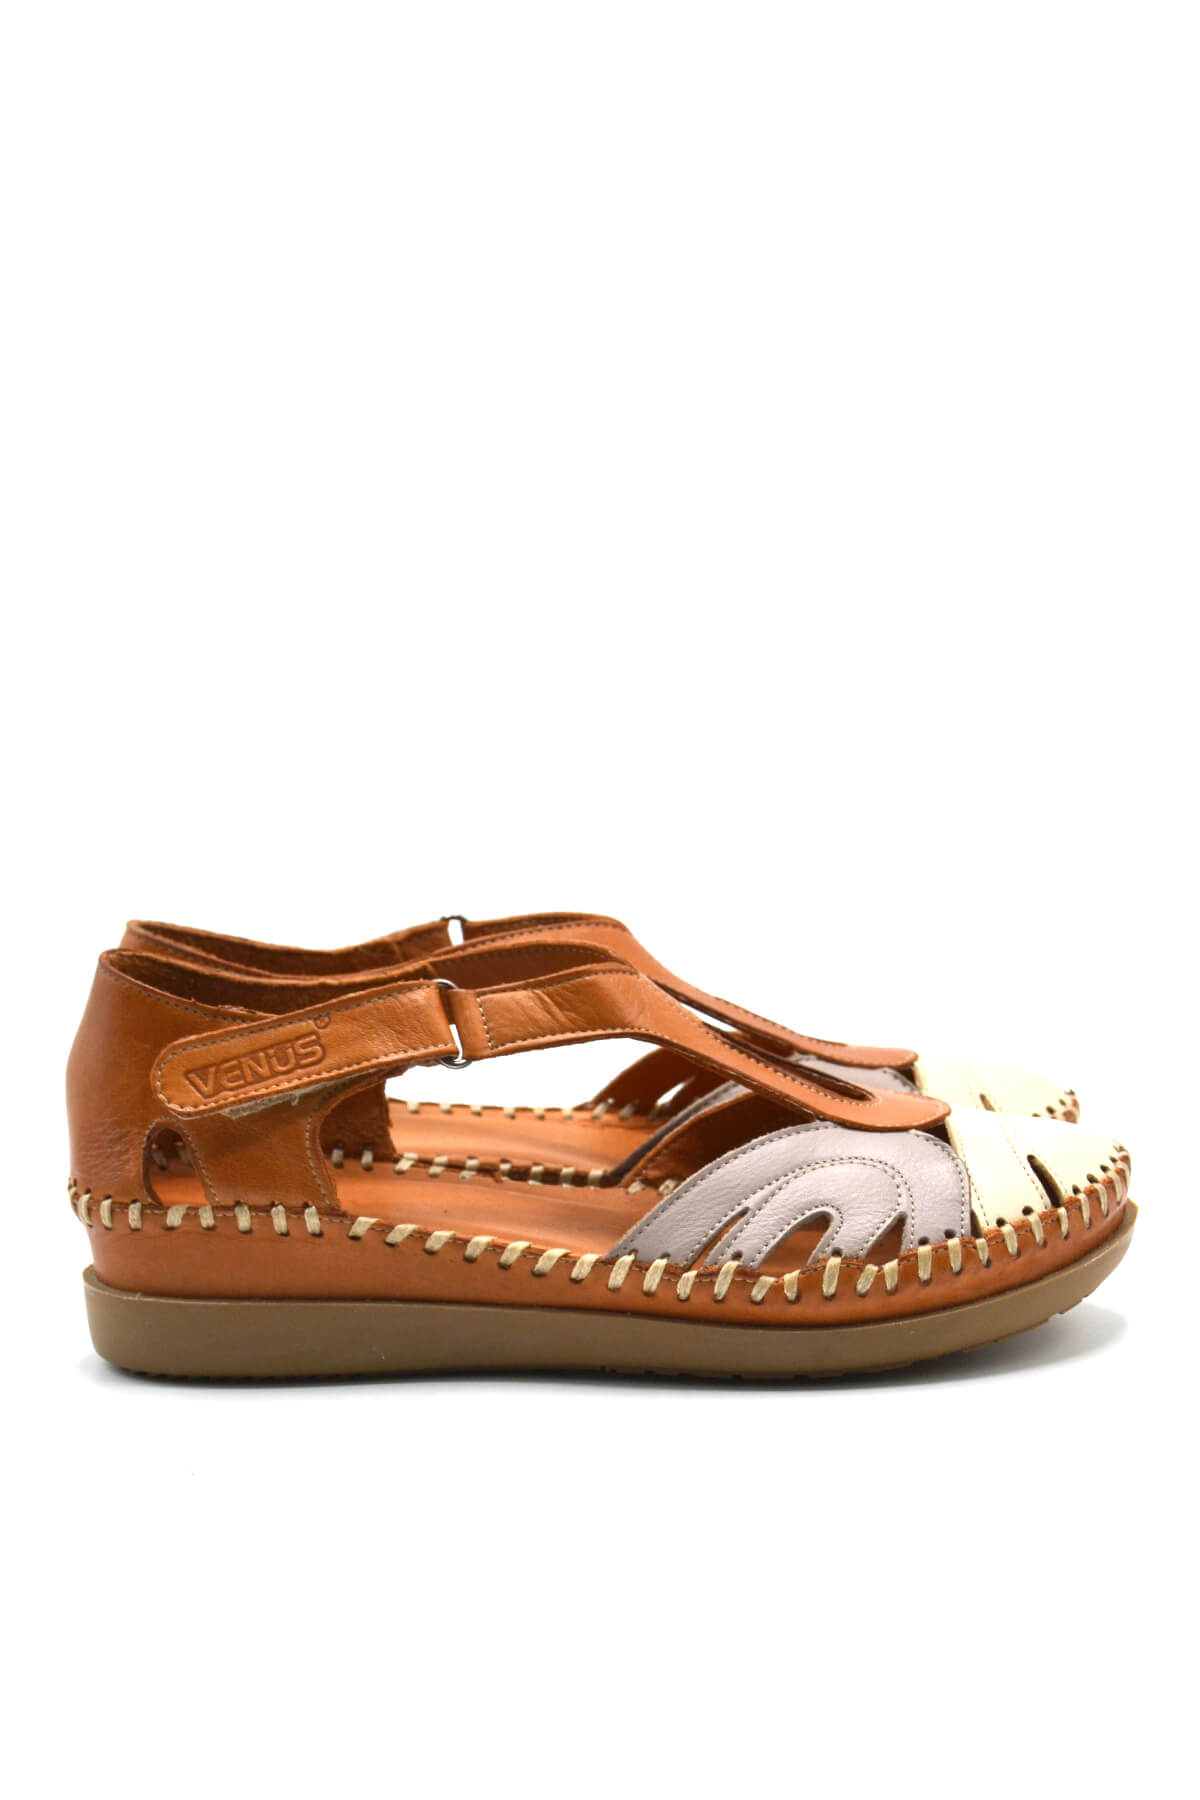 Kadın Comfort Sandalet Taba 18793502 - Thumbnail